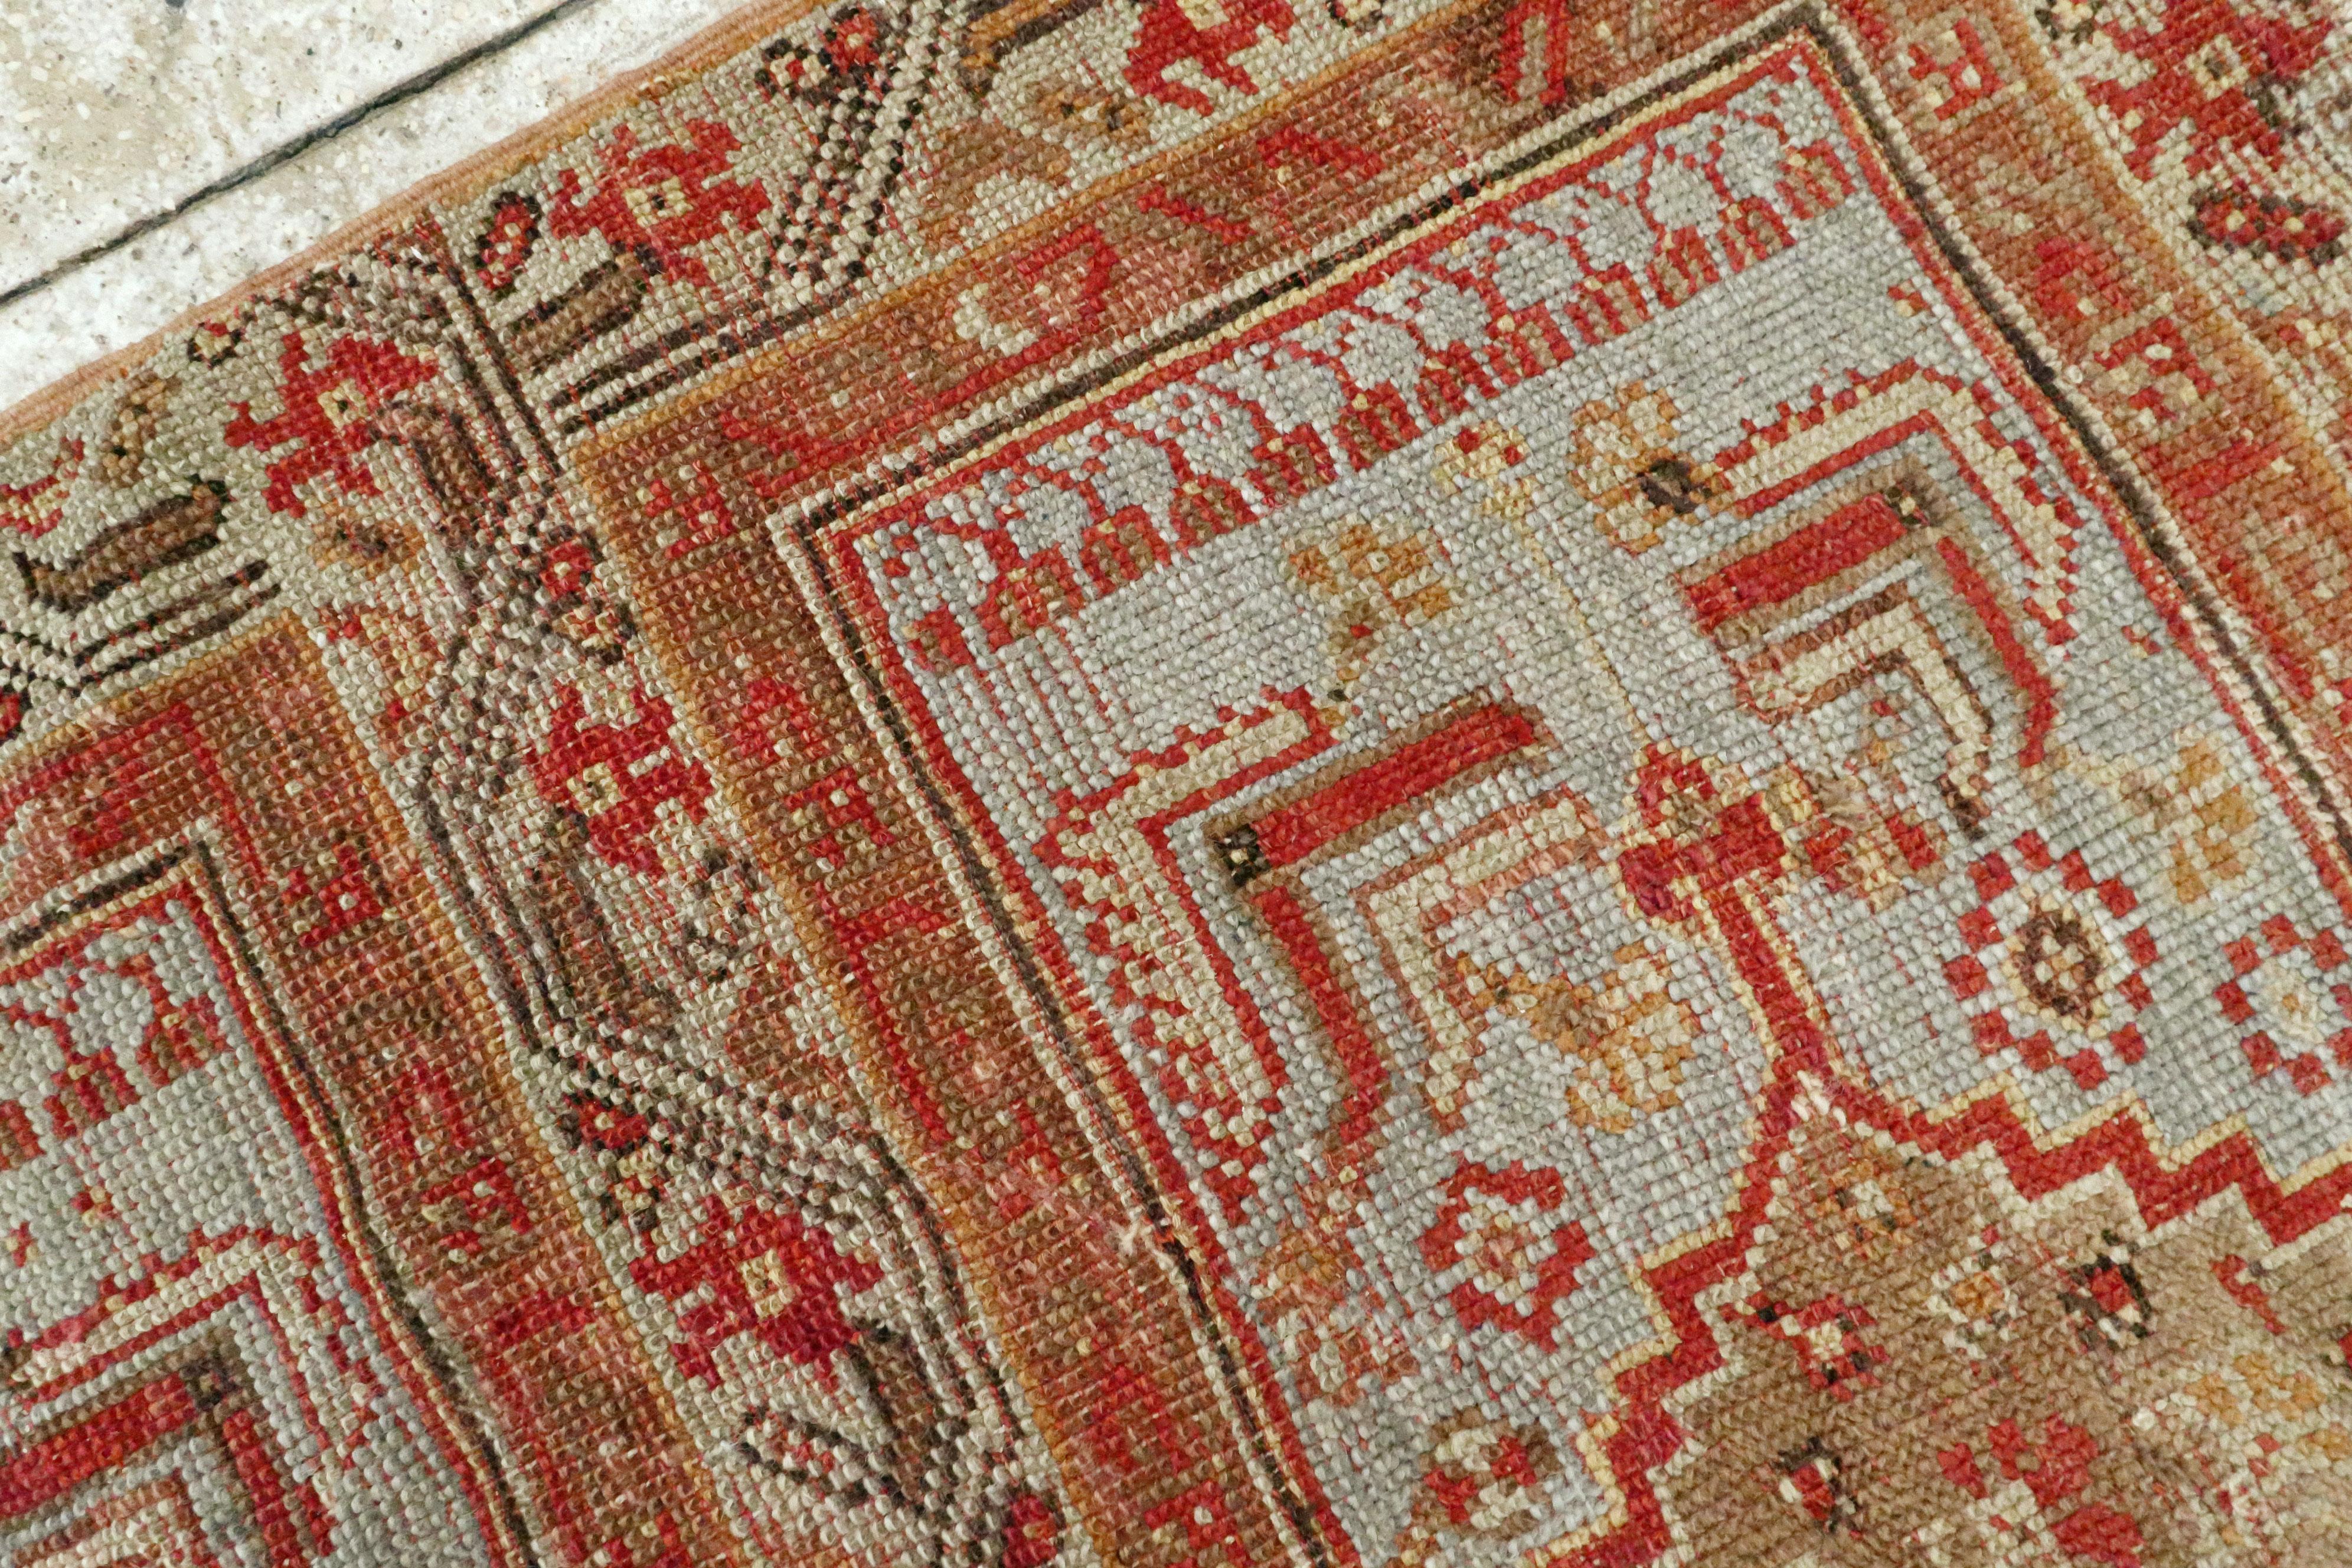 19th Century Antique Turkish Ghiordes Carpet